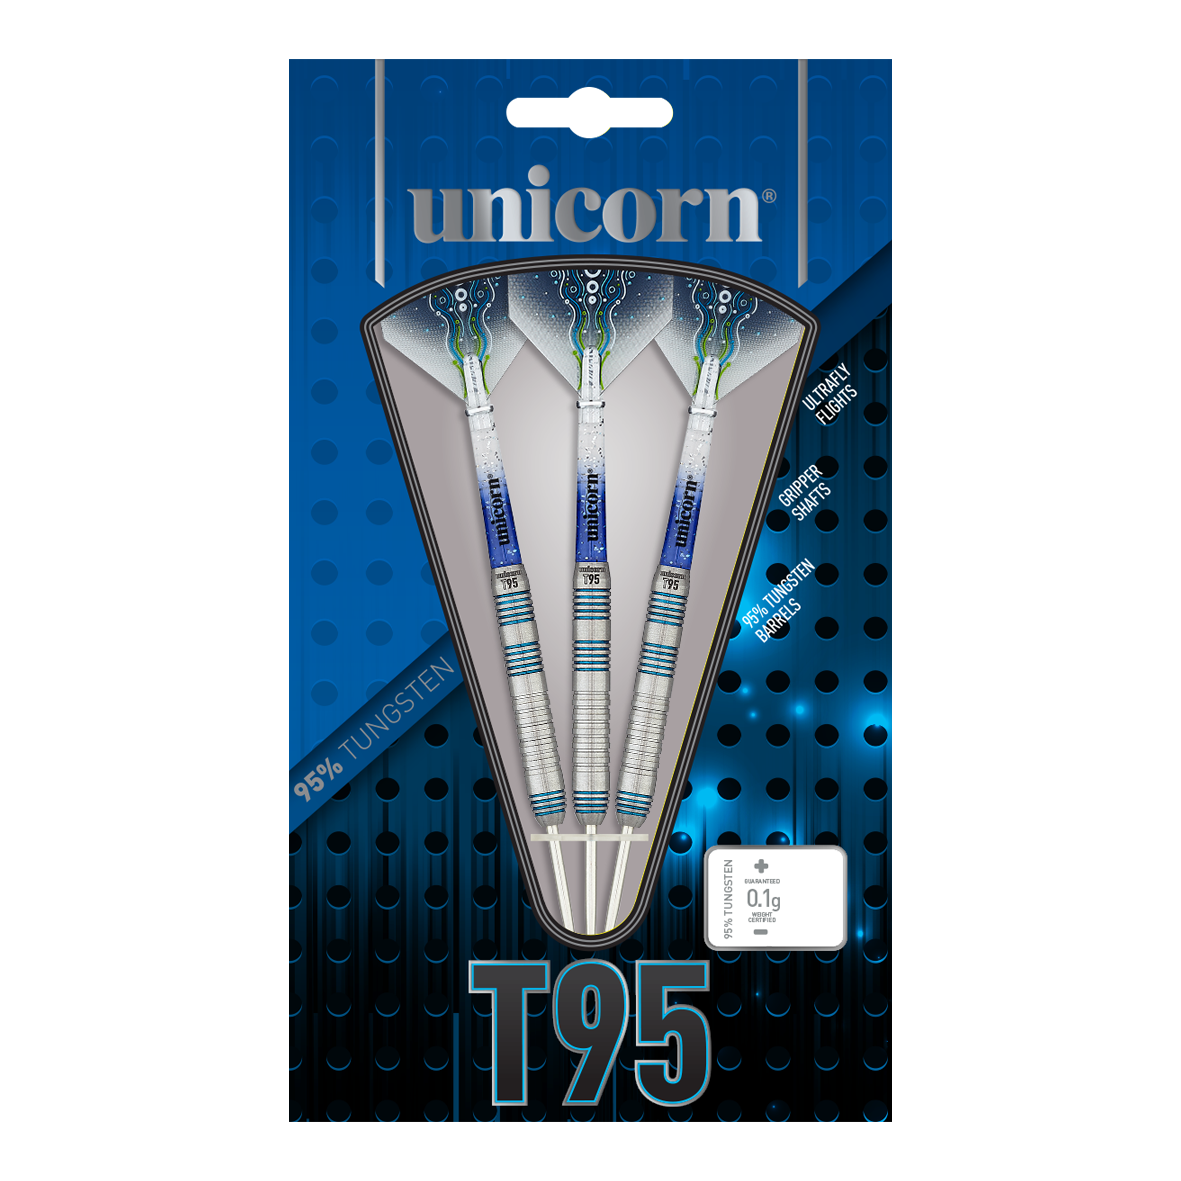 Unicorn T95 Core XL Blue Style 2 Steeldarts - 23g